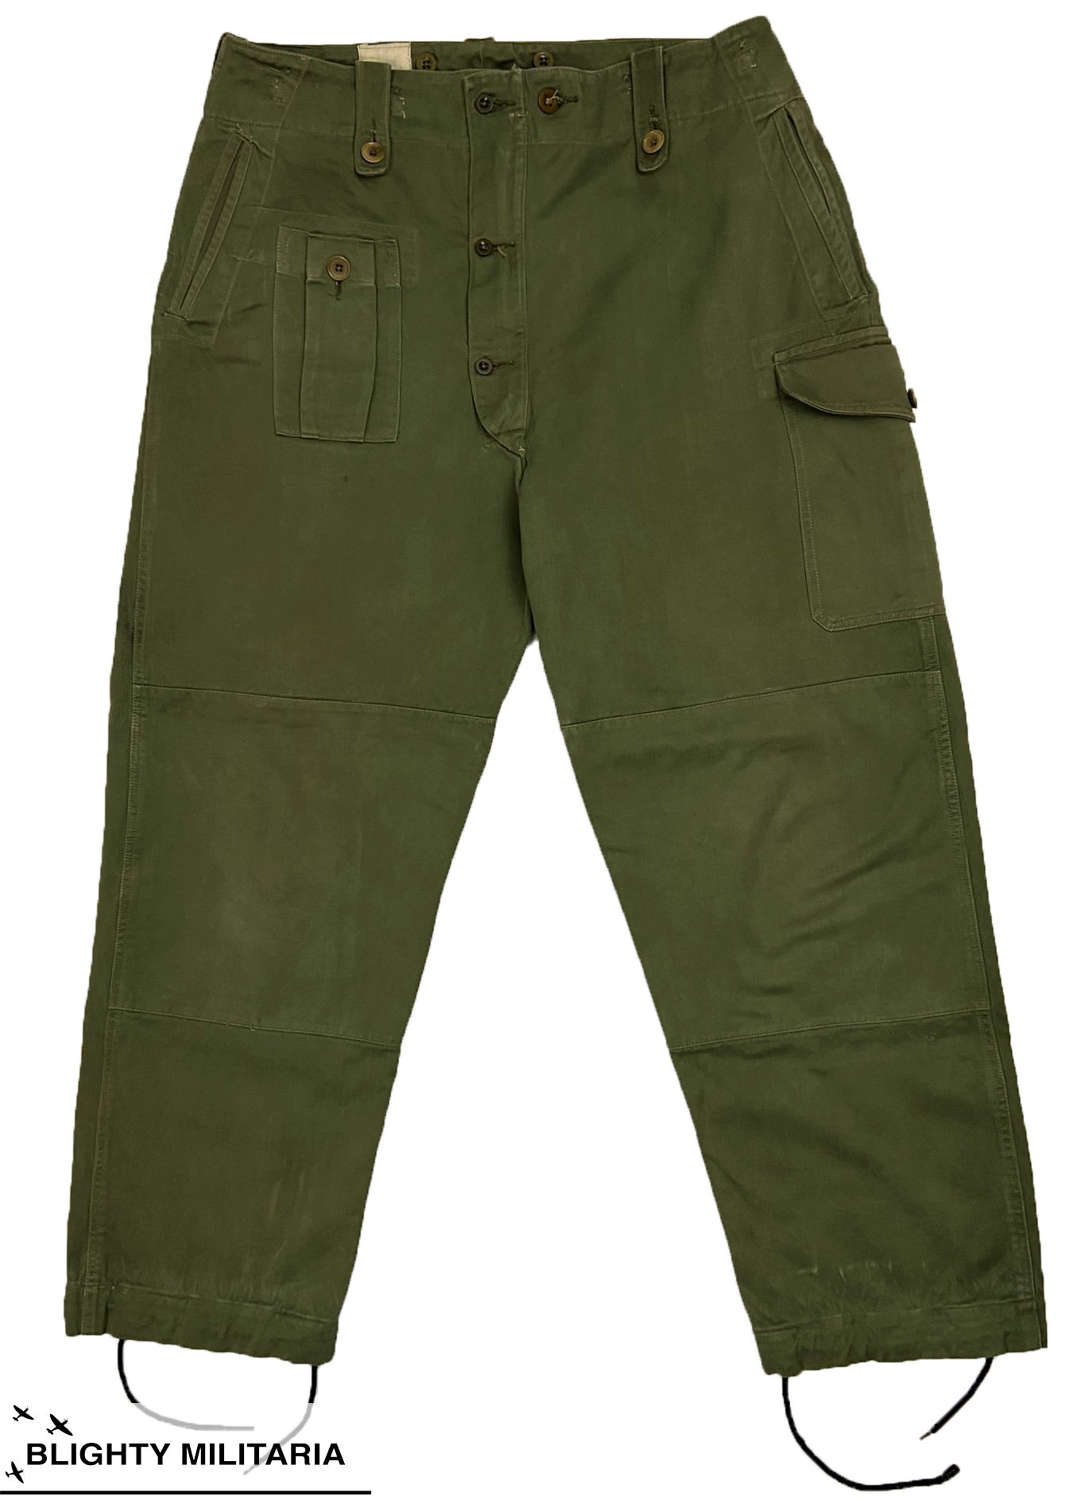 Rare Original 1952 Pattern Combat Sateen Trousers - Size 8